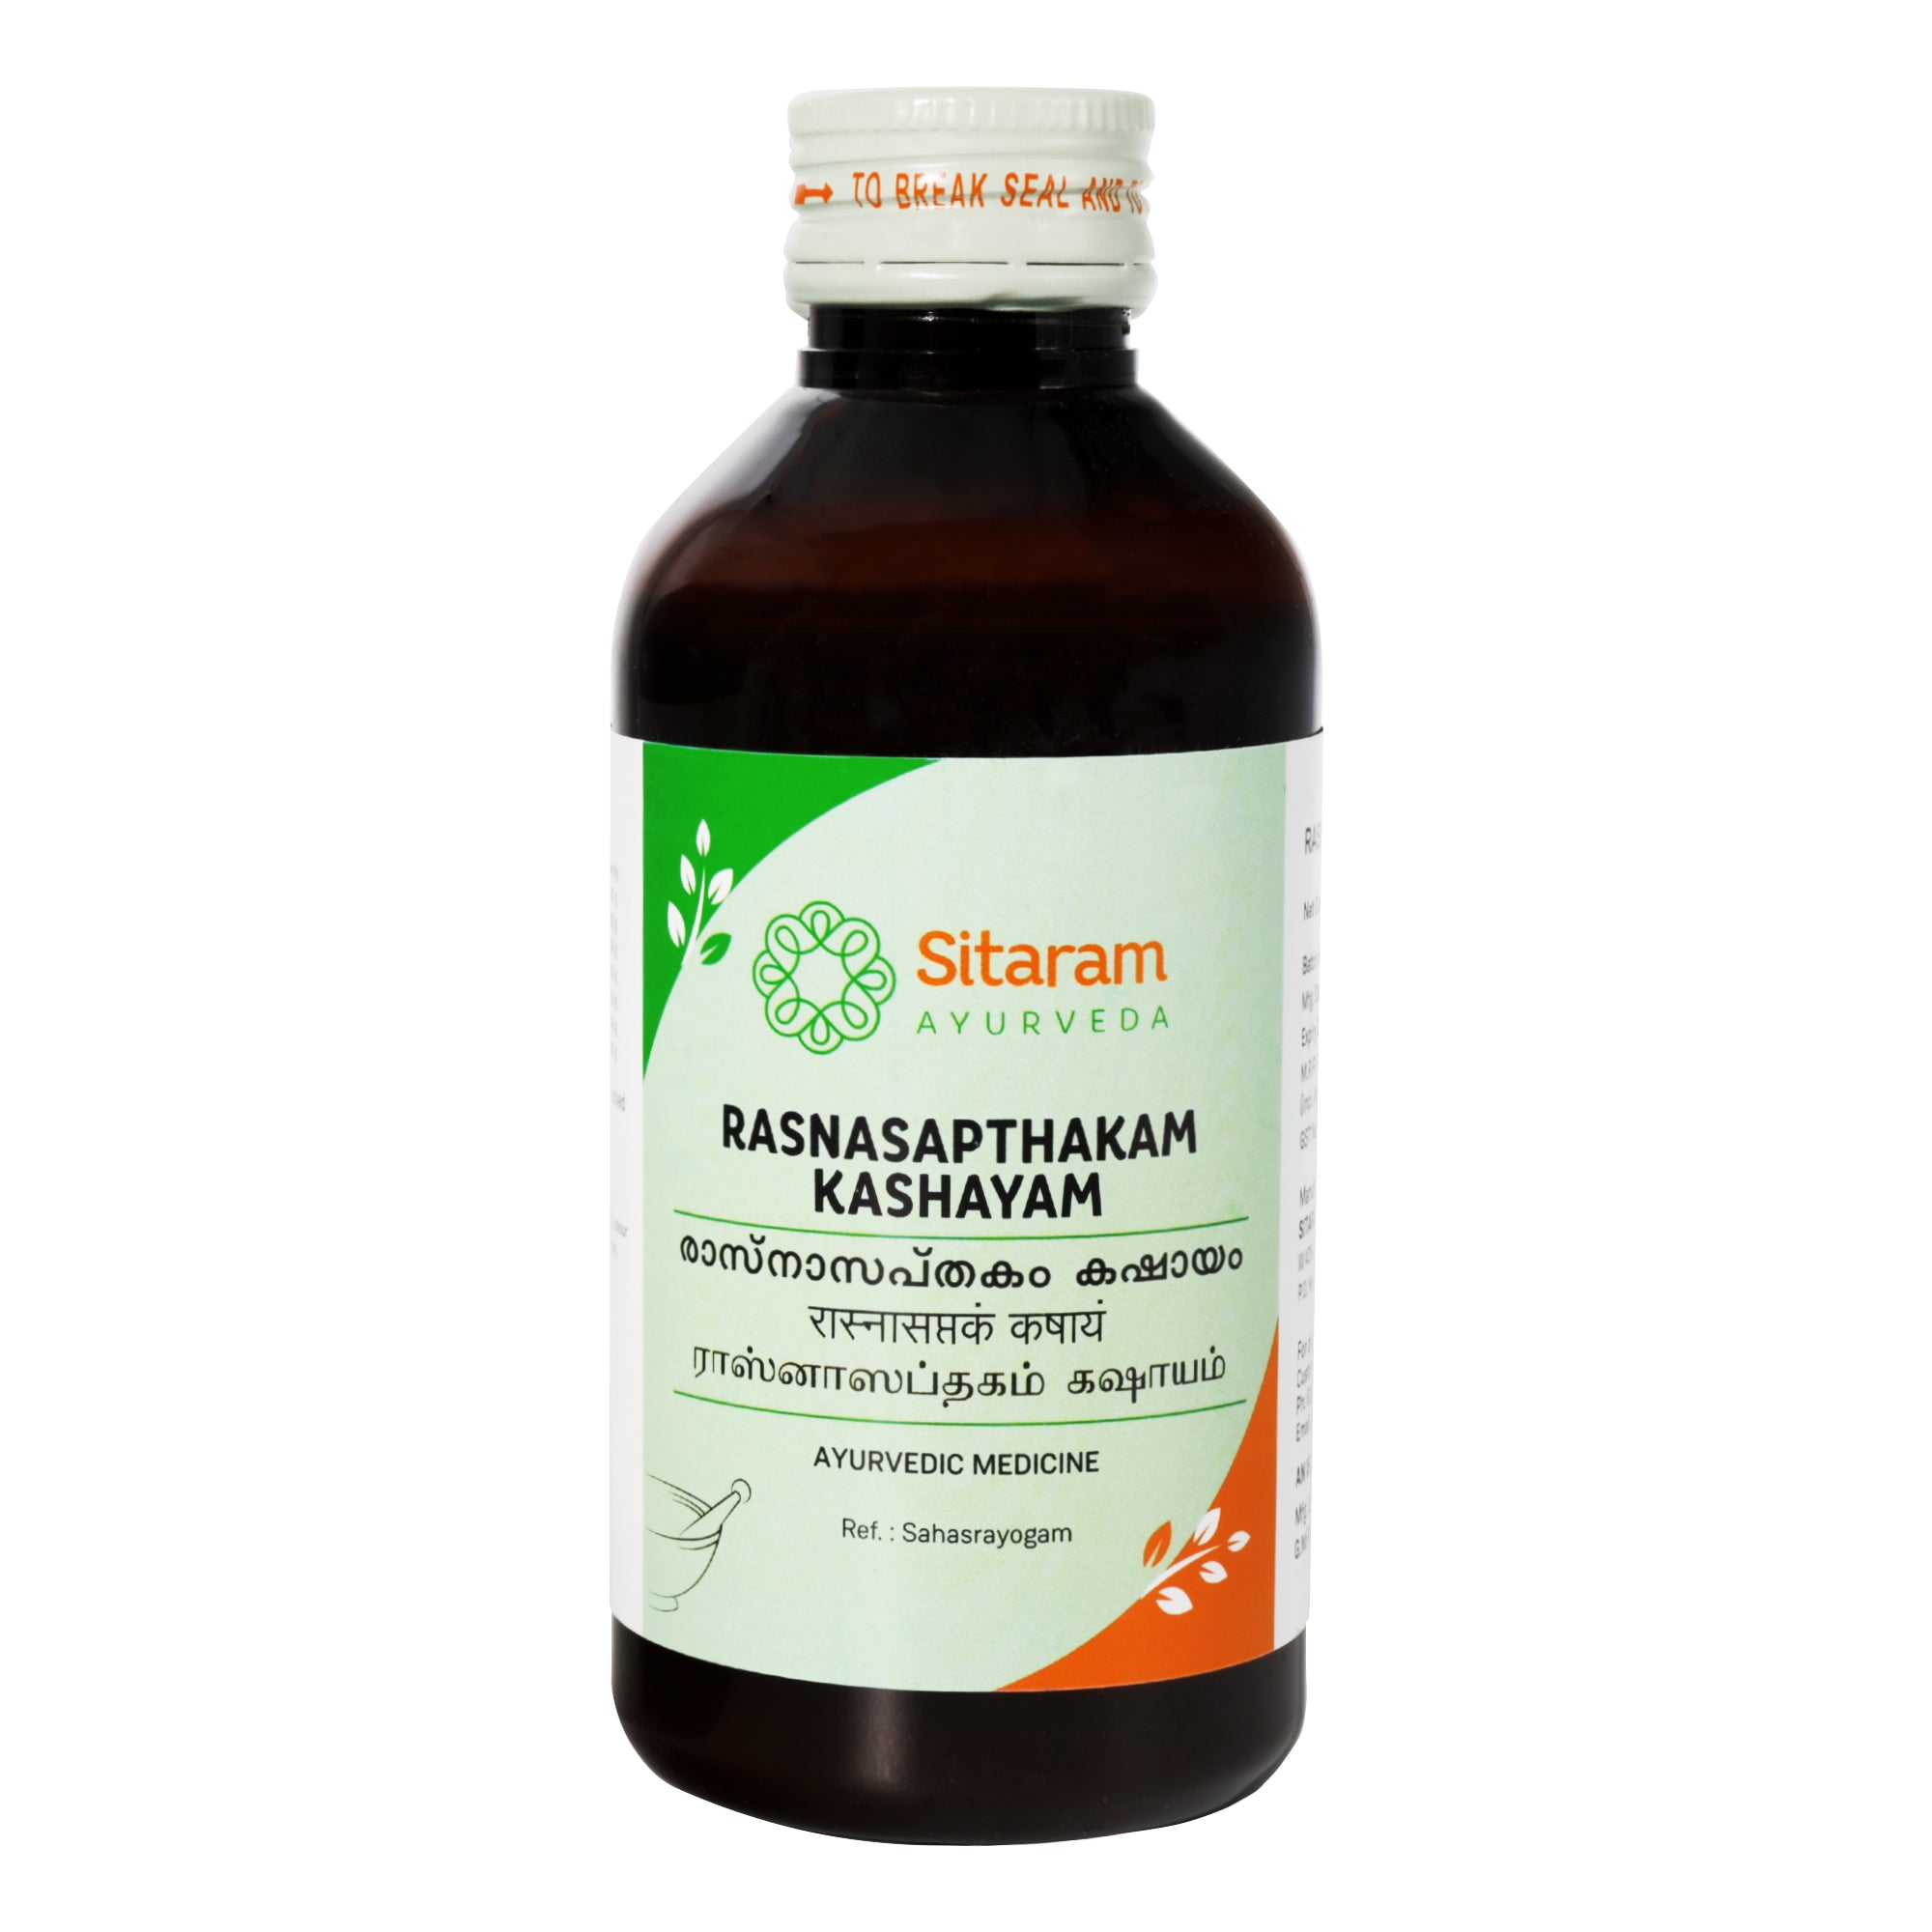 Sitaram Ayurveda Rasnasapthakam Kashayam - Pack of 2 200Ml (Prescription Medication)